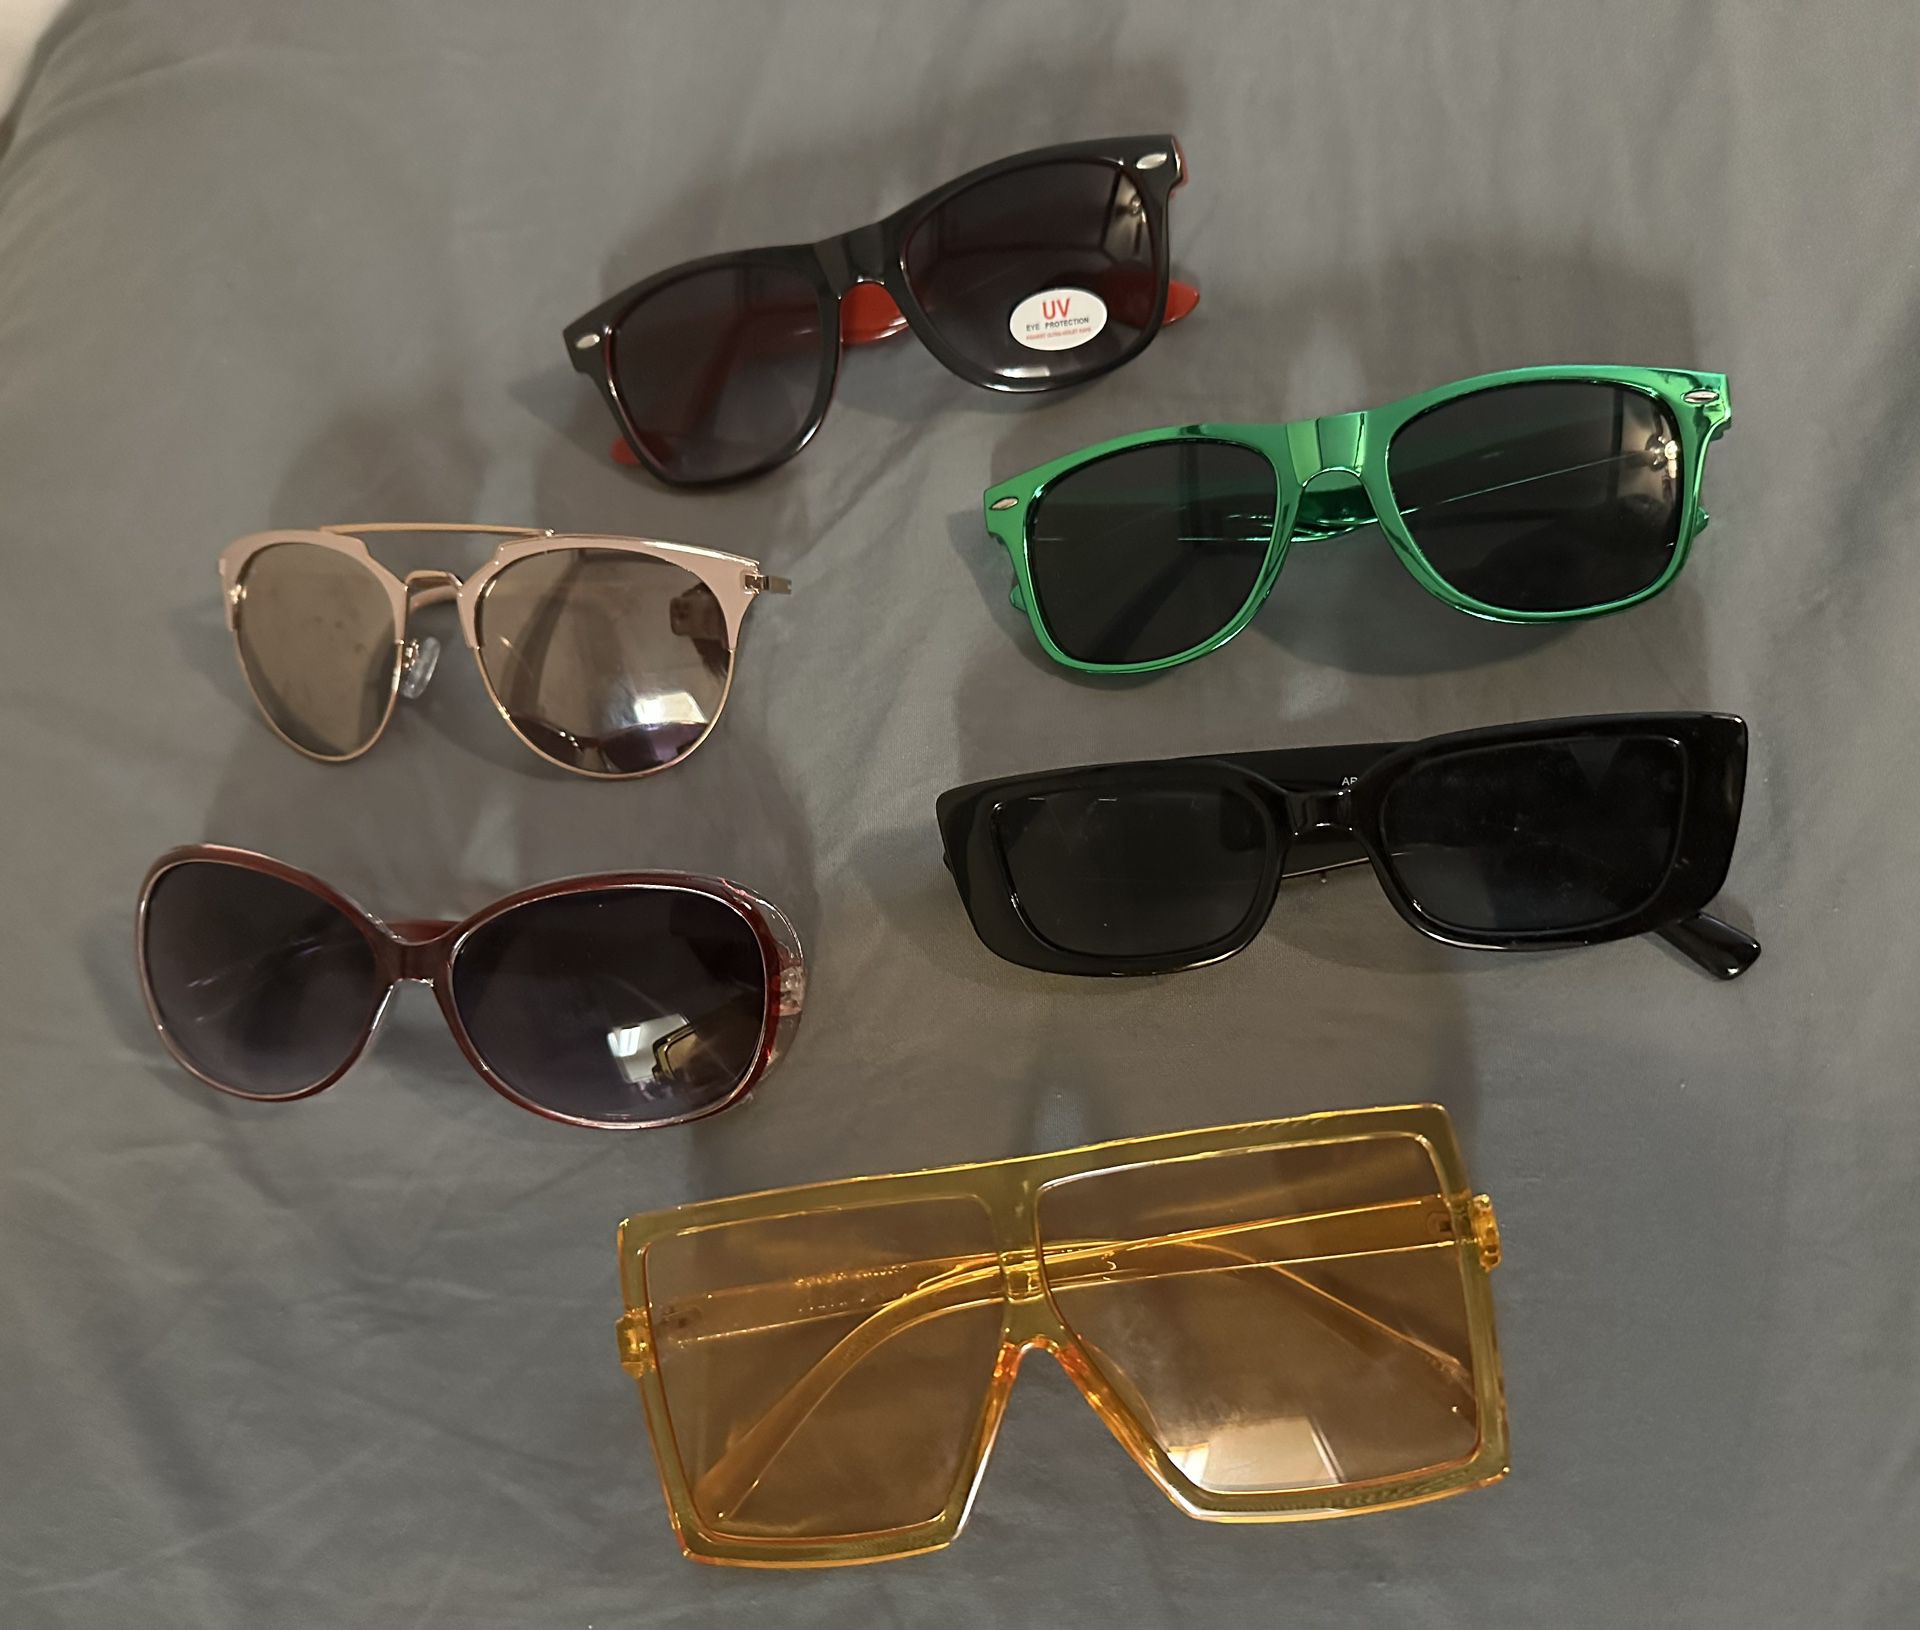  6 Sunglasses